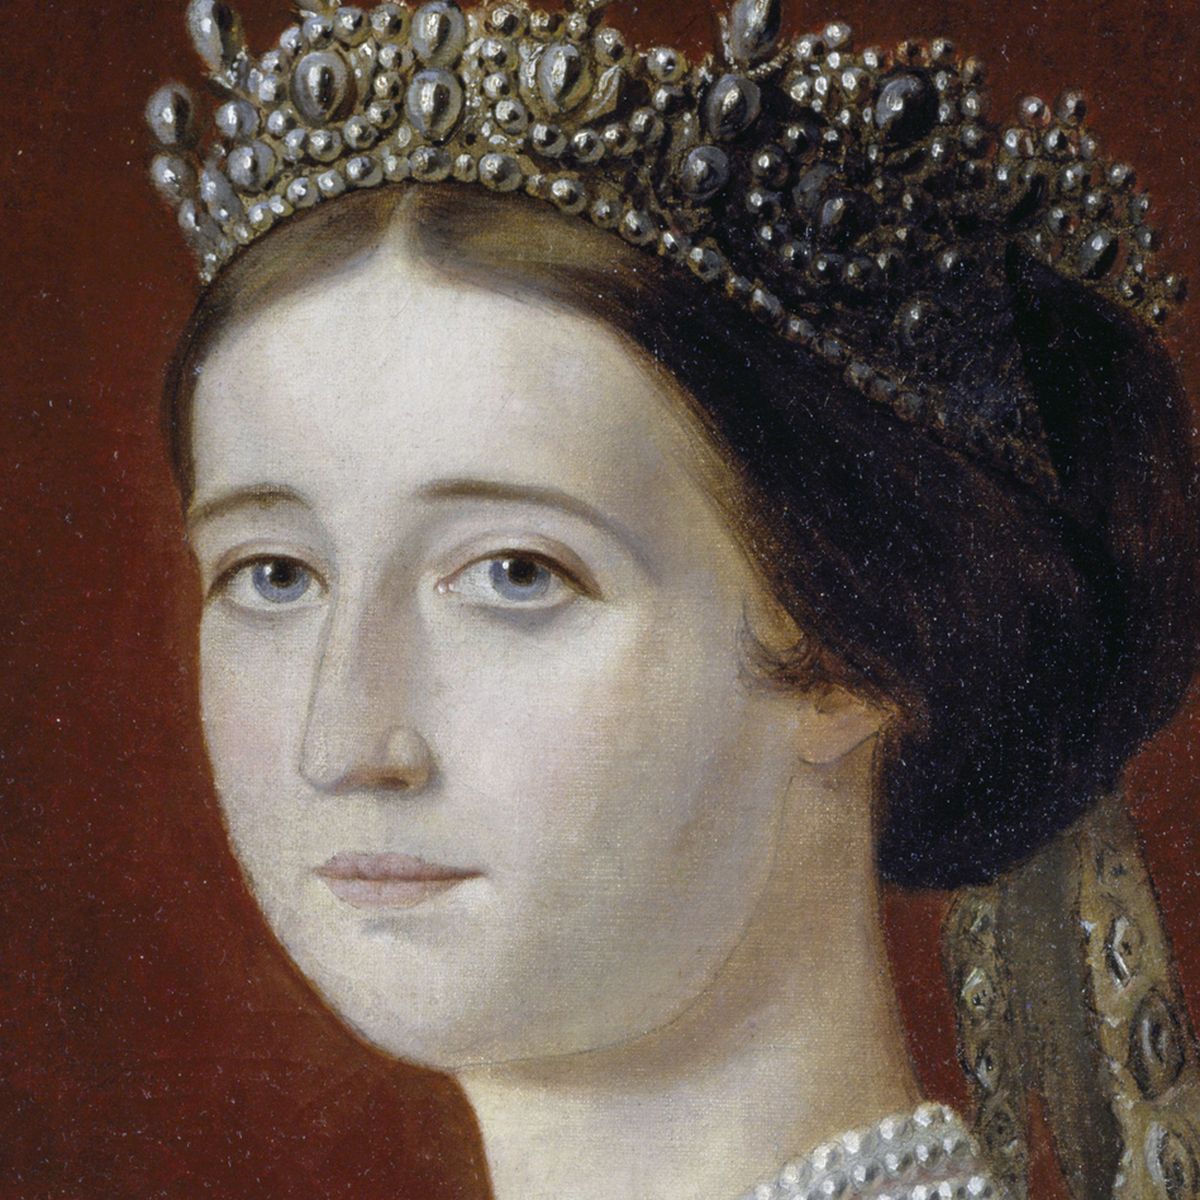 Image of French empress Eugenie (1826-1920, born Eugenia Maria de Montijo de